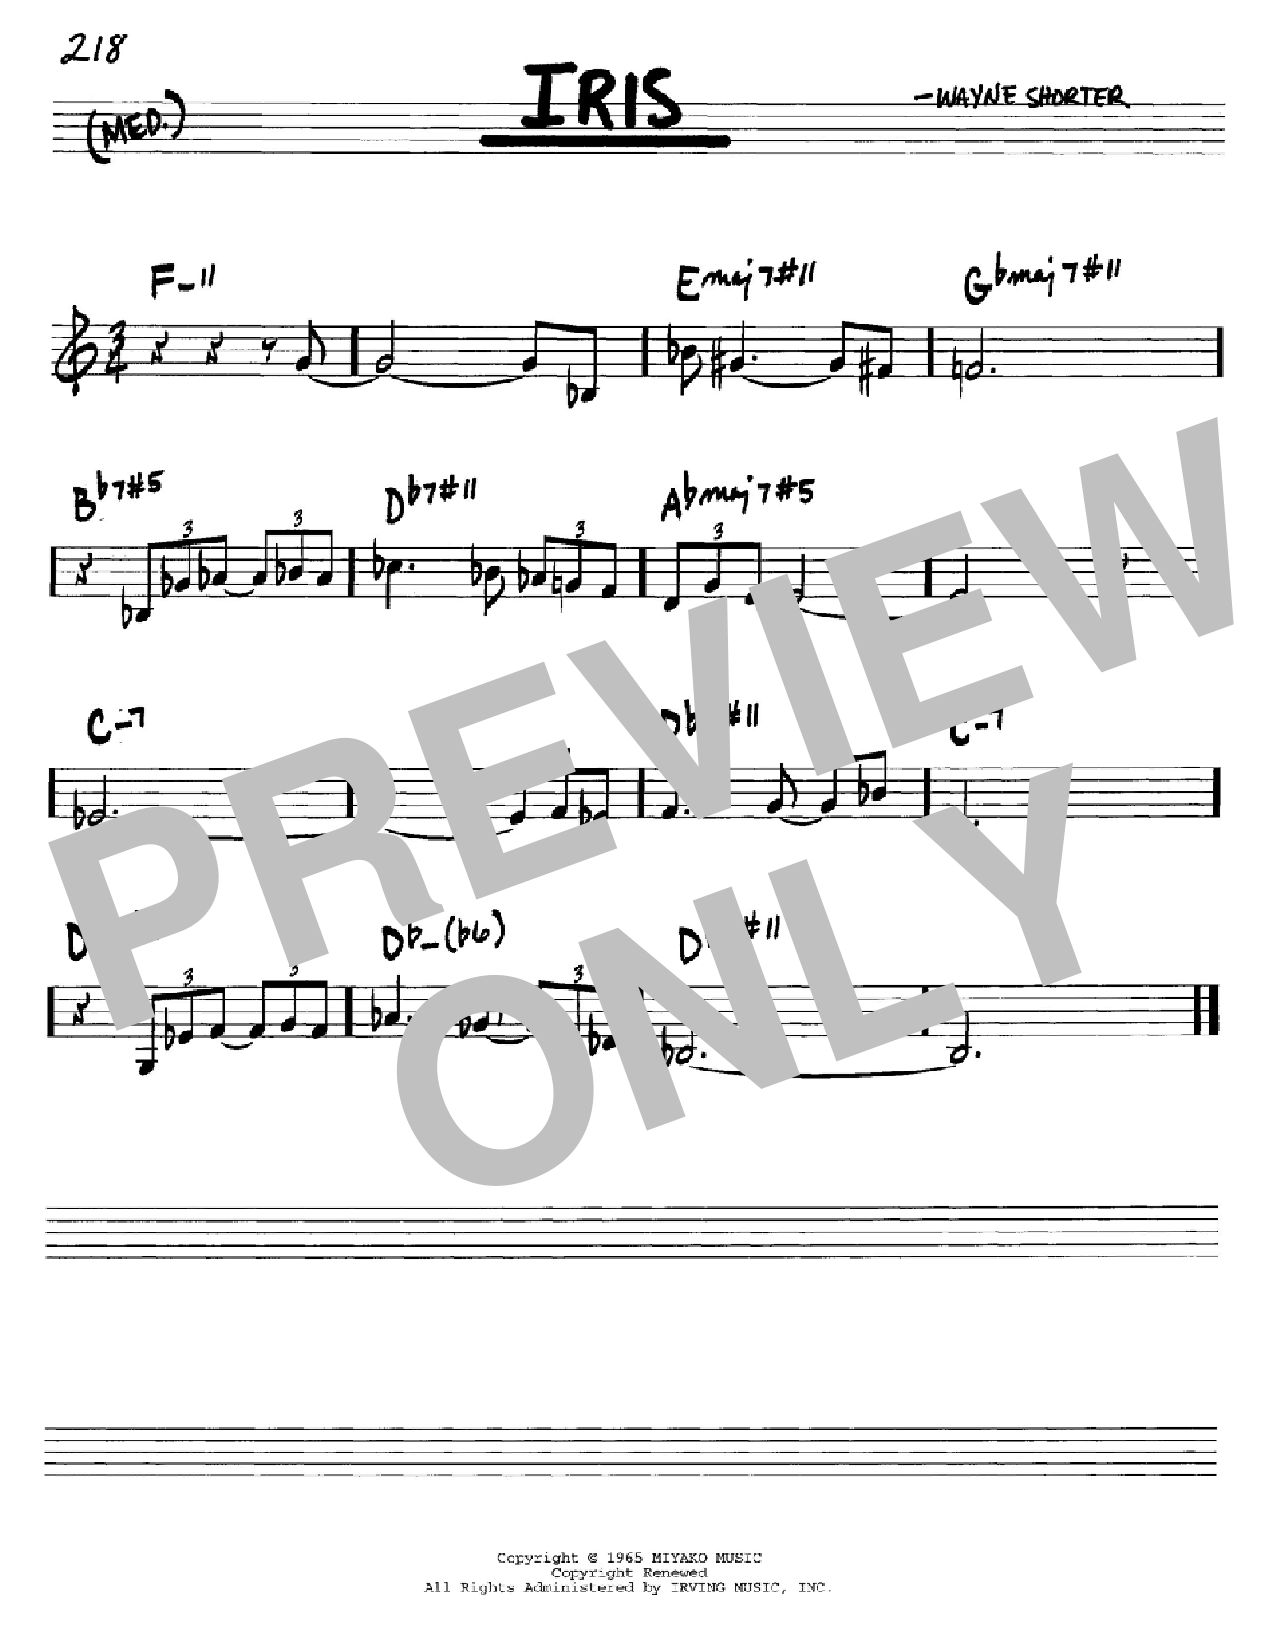 Wayne Shorter Iris Sheet Music Notes & Chords for Real Book - Melody & Chords - Bb Instruments - Download or Print PDF